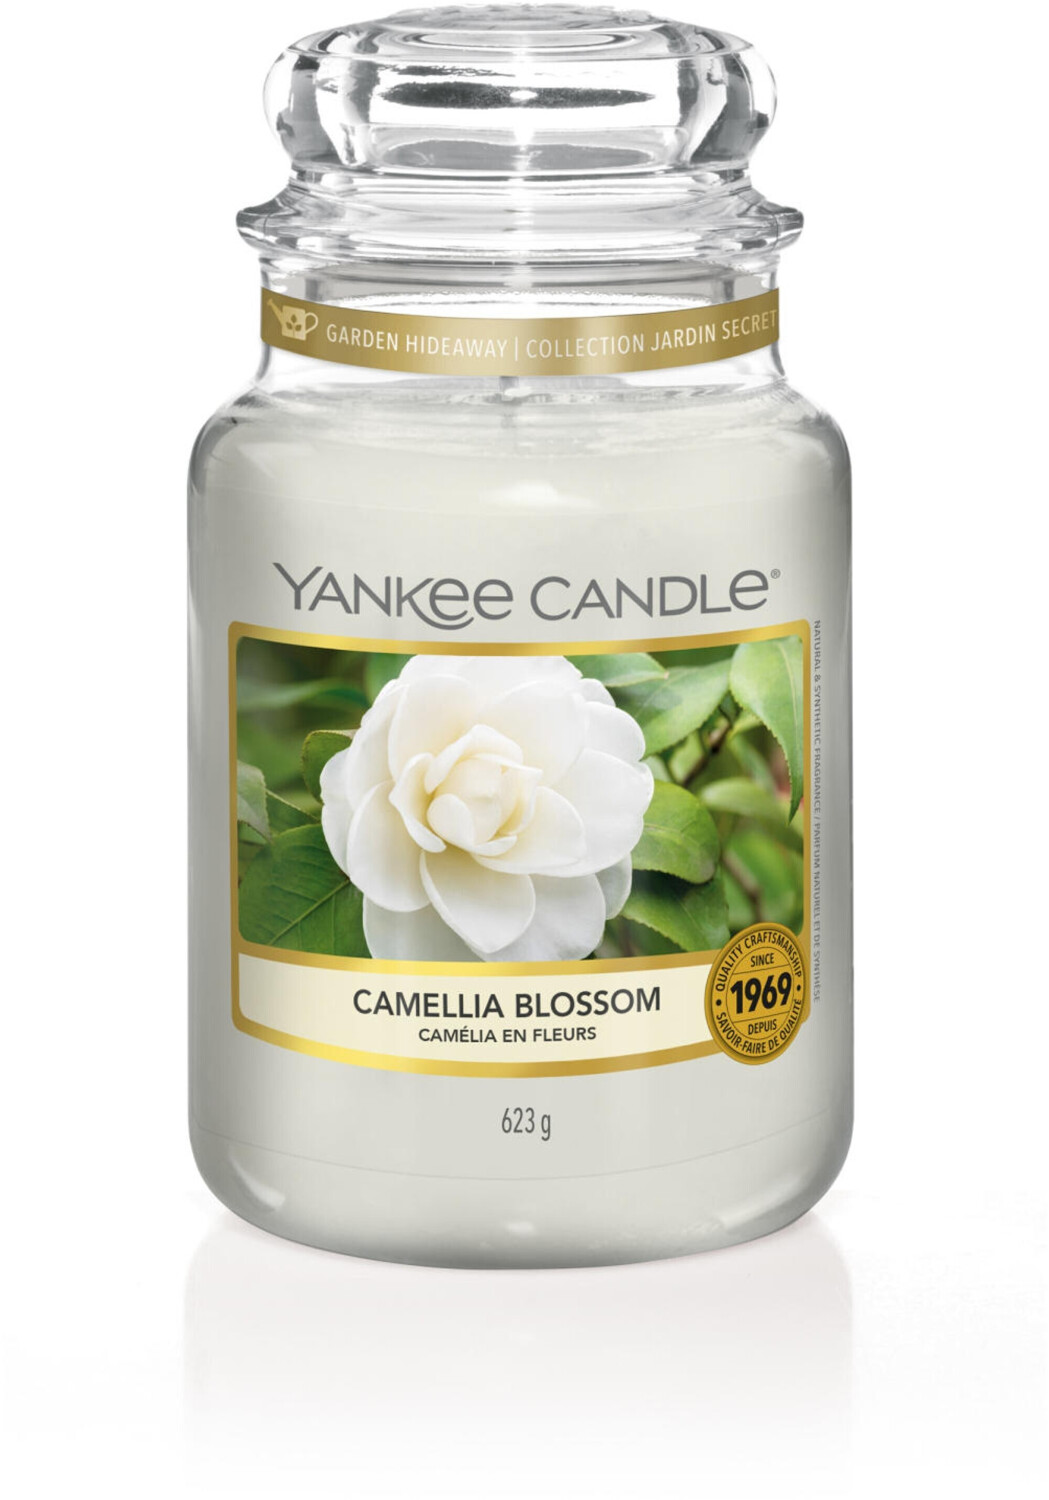 Yankee Candle Vanilla Lime Housewarmer 623g a € 19,45 (oggi)